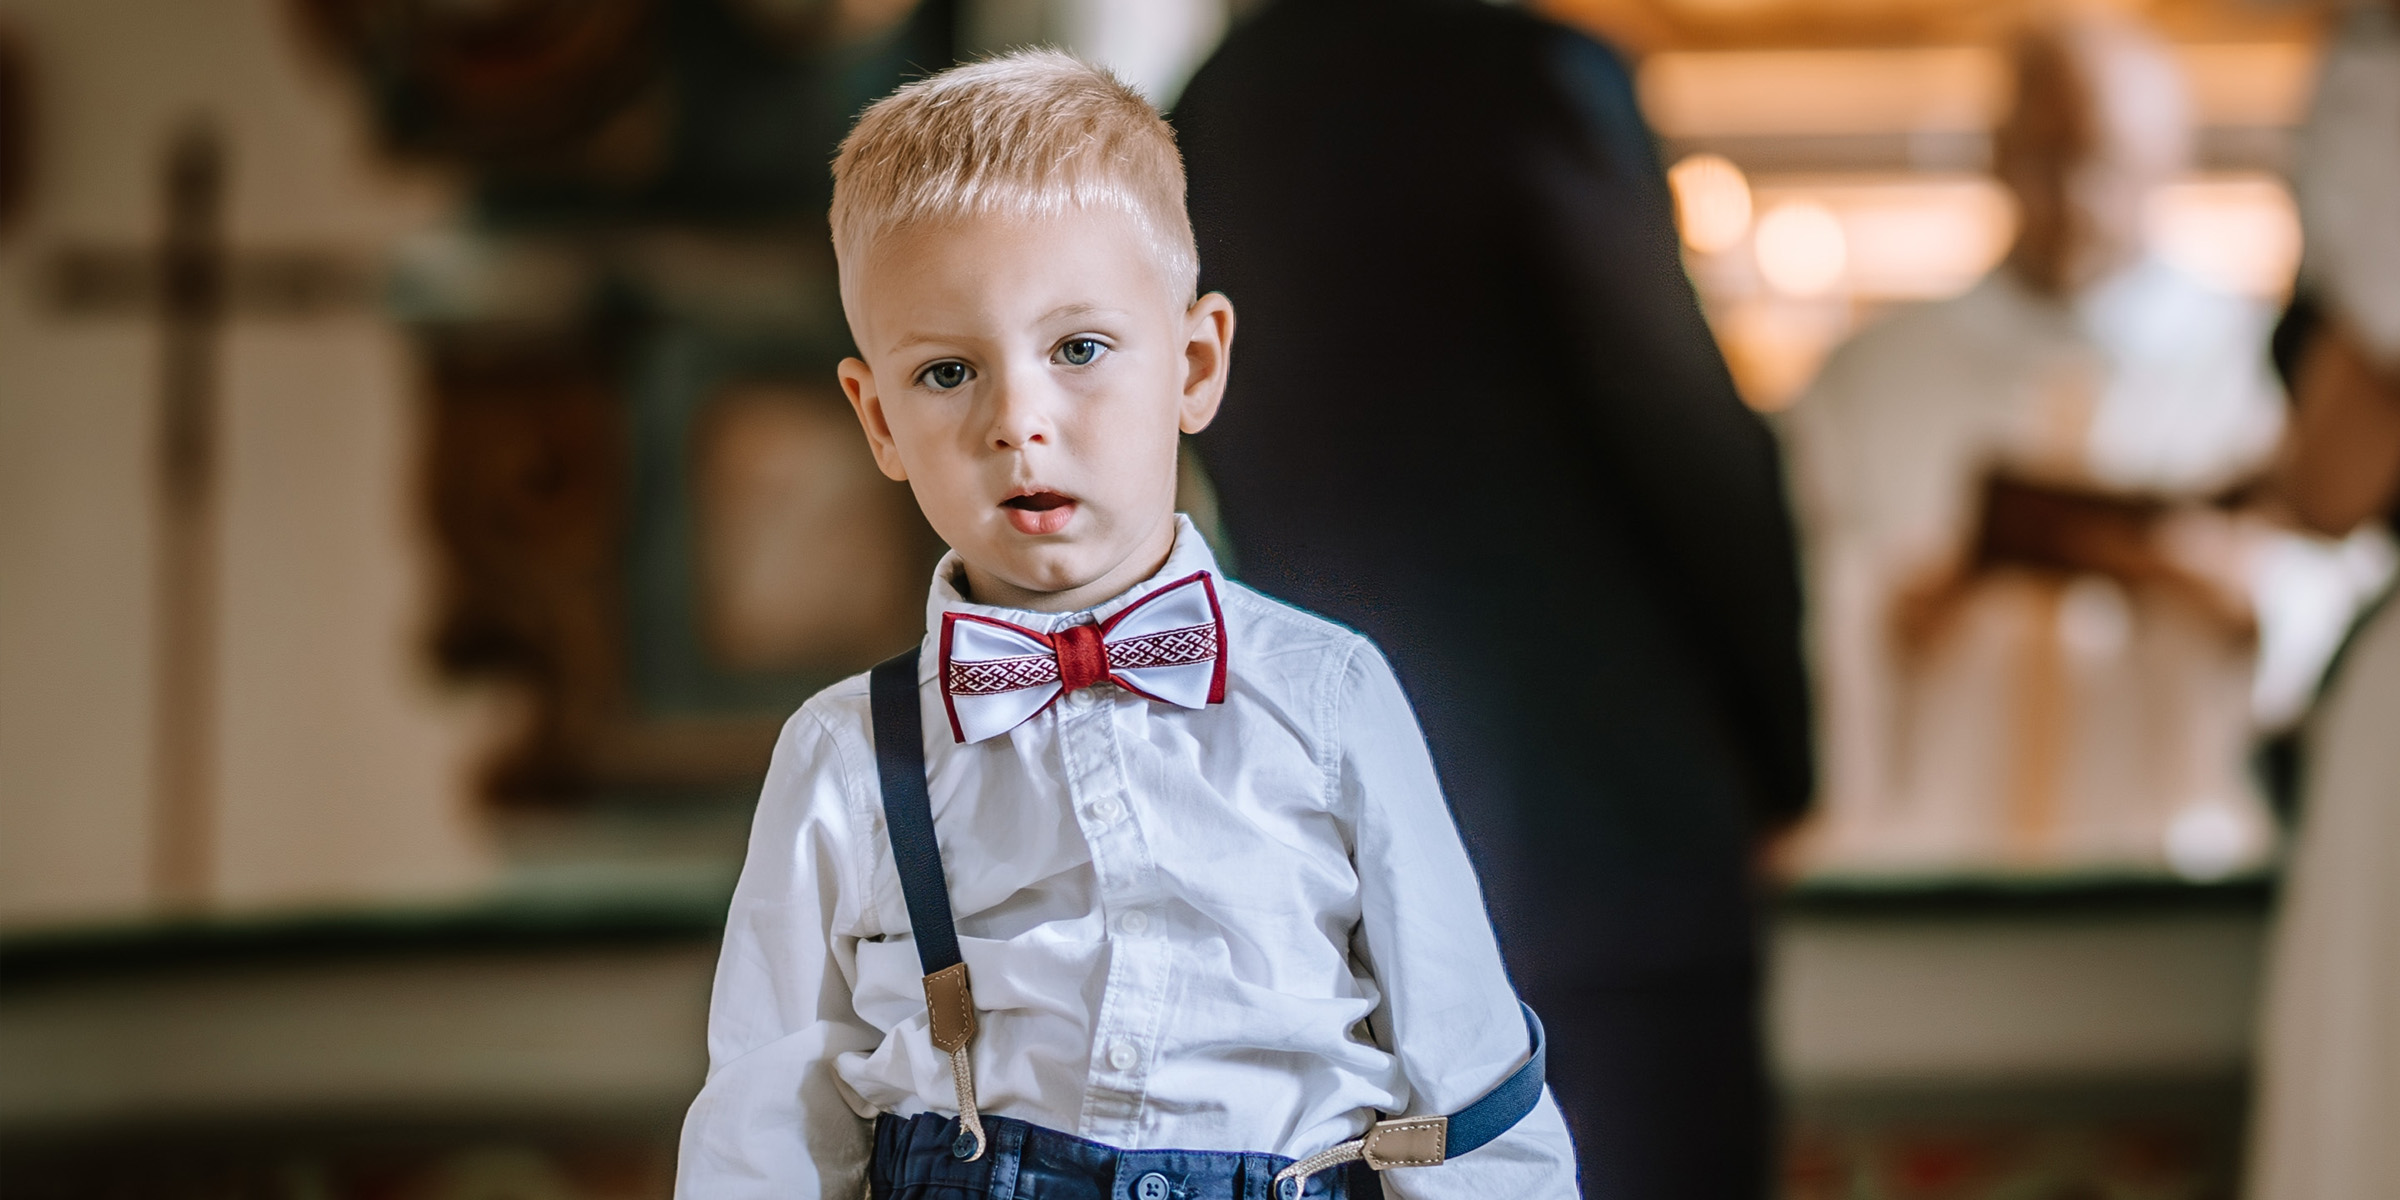 A little boy | Source: Shutterstock